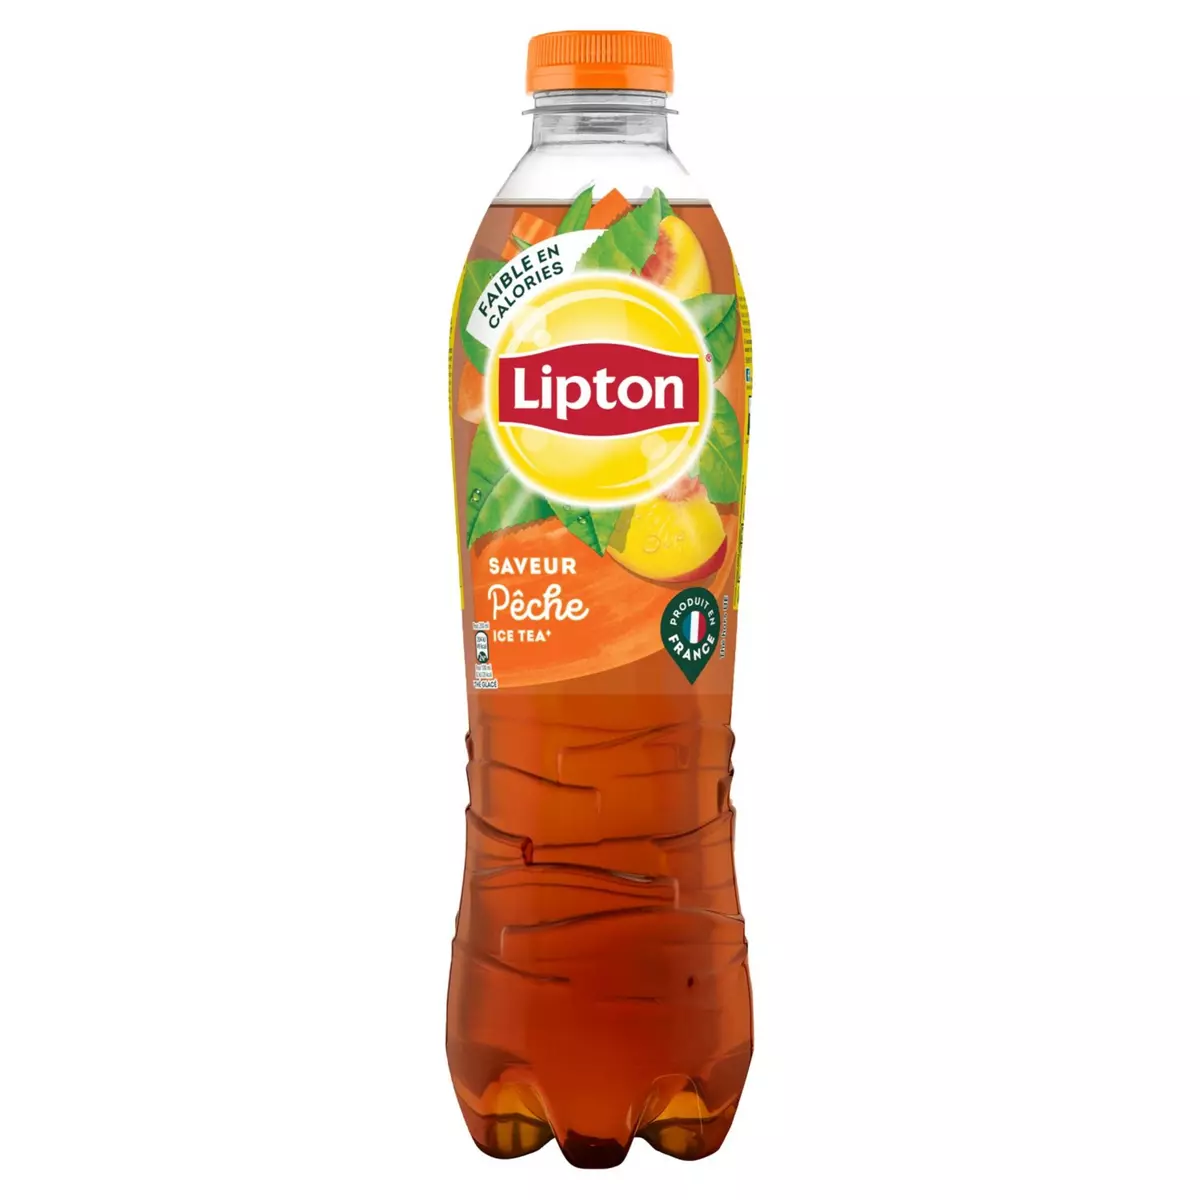 LIPTON boisson ice tea à base de thé saveur pêche  1,5l